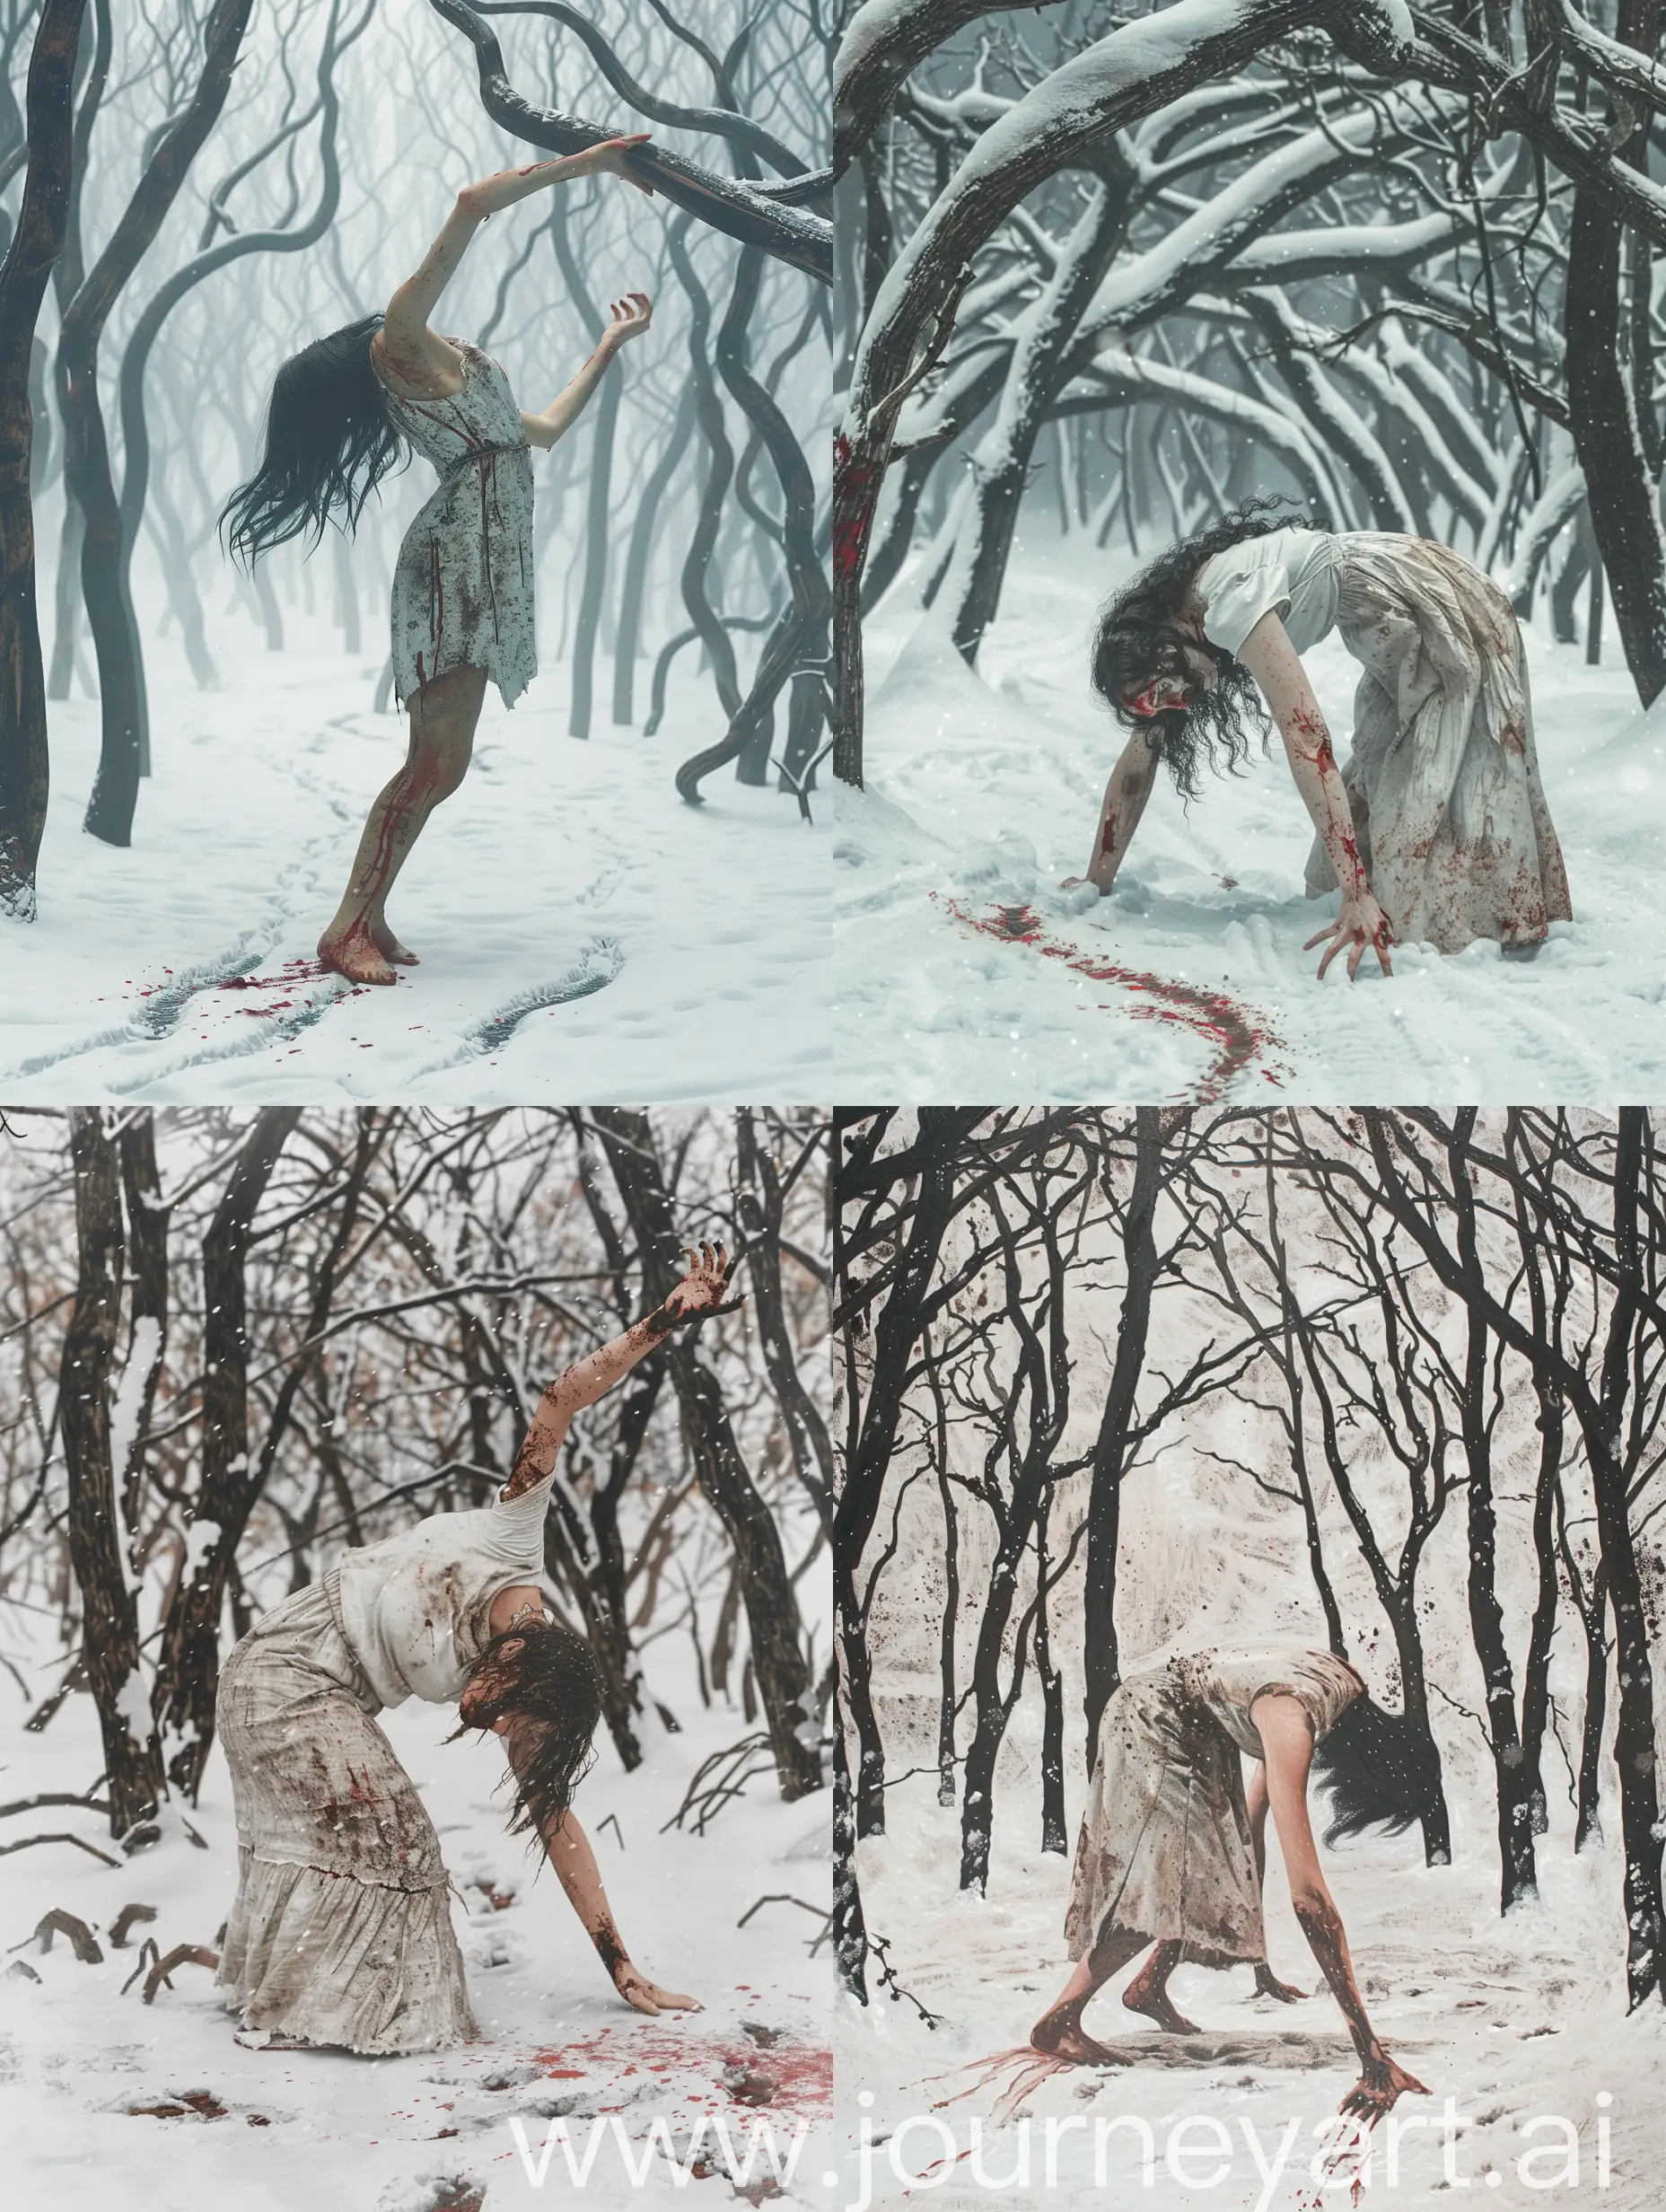 Tormented-Possessed-Woman-in-Bleak-Snowy-Forest-Horror-Art